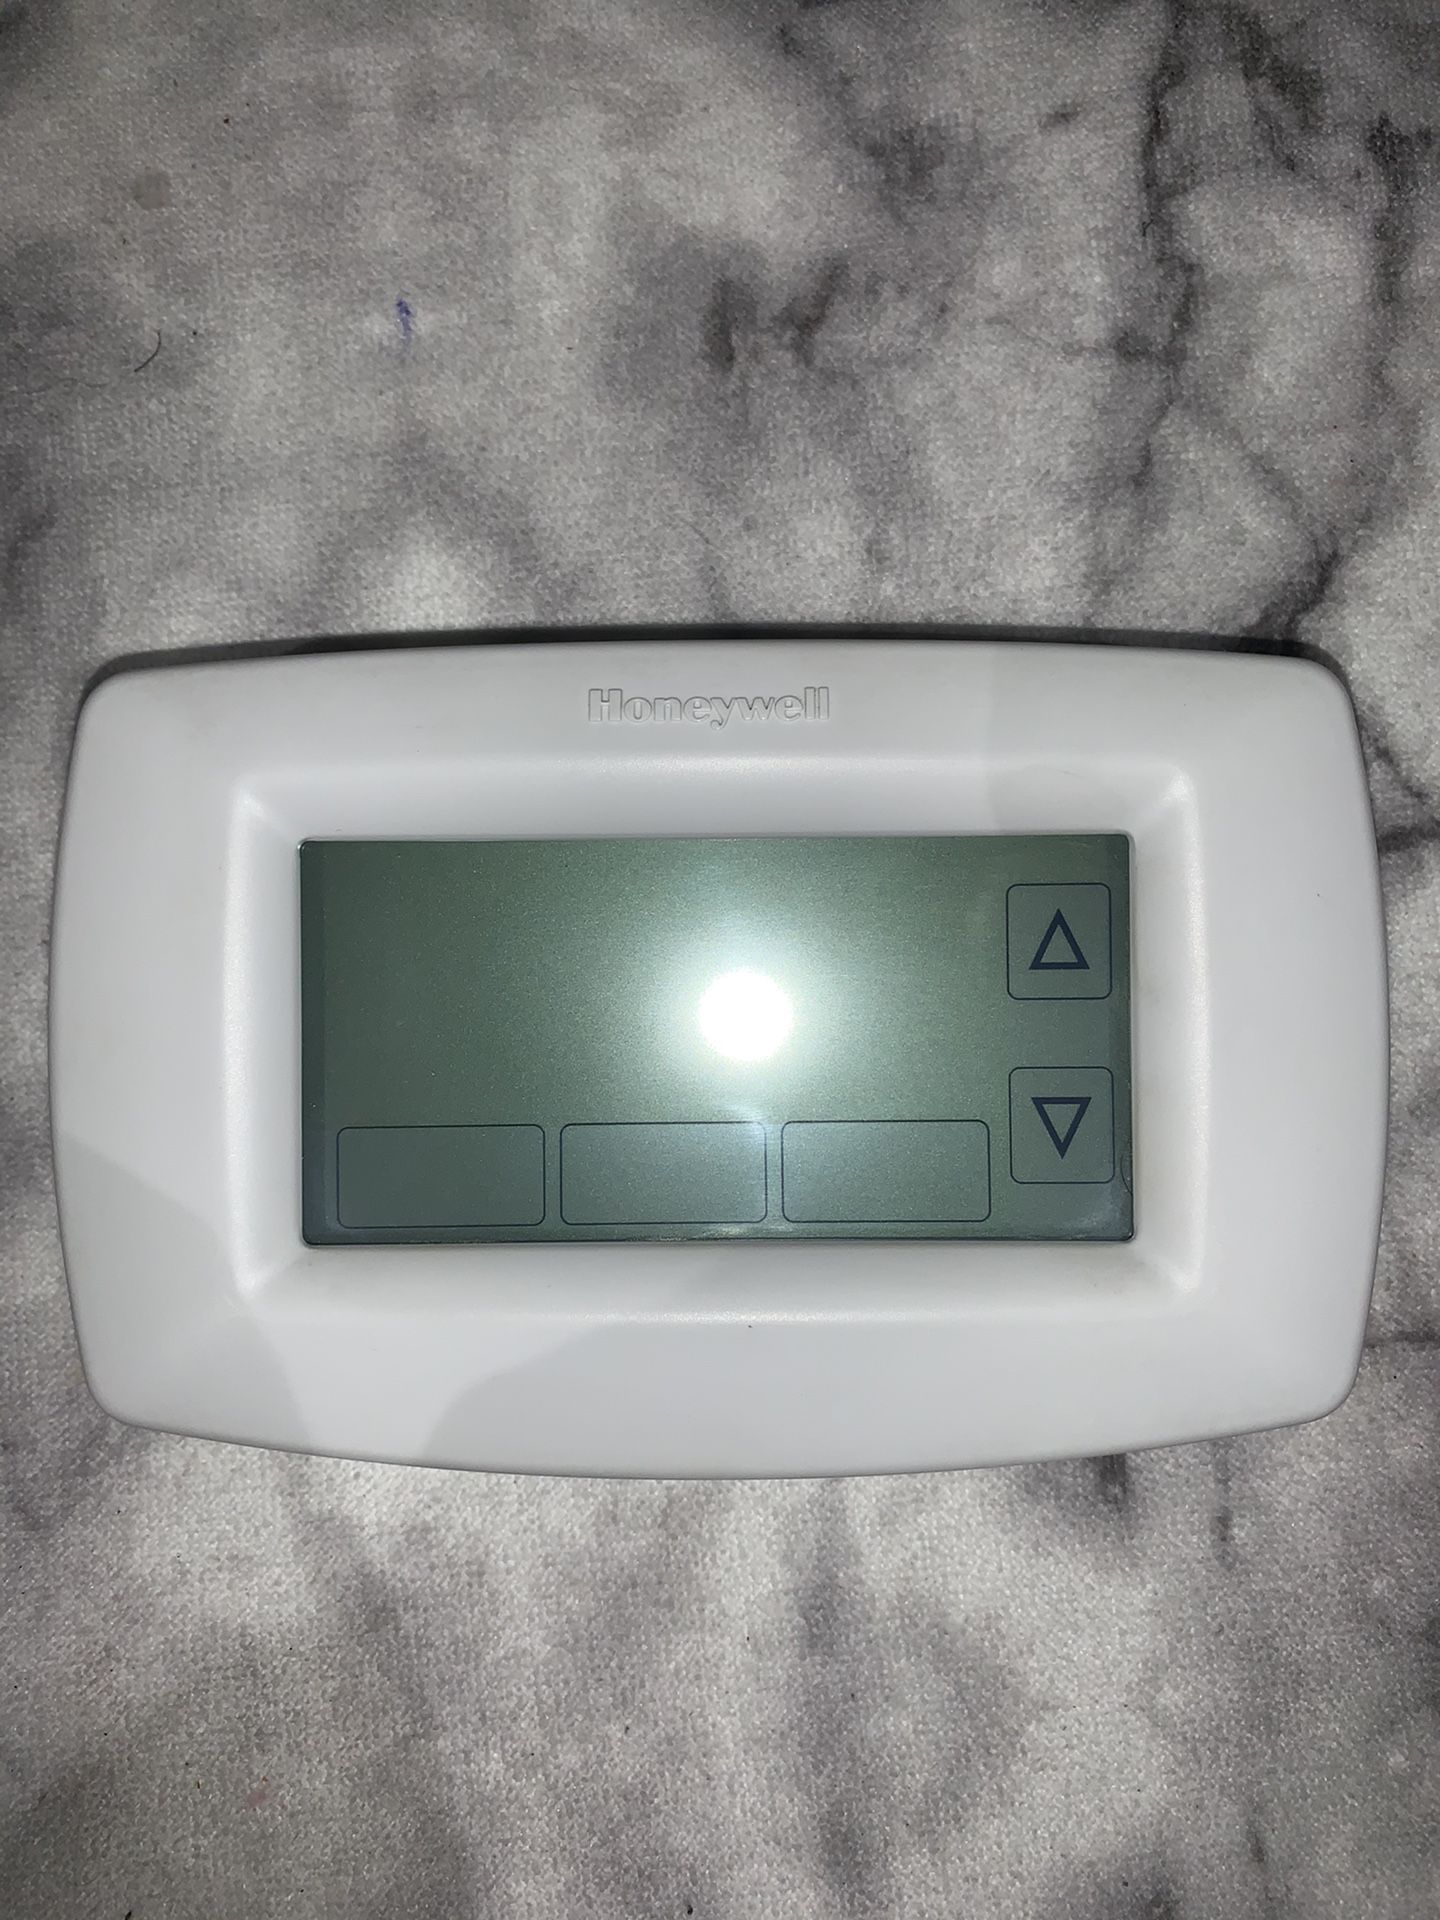 Honeywell Programmable Thermostat